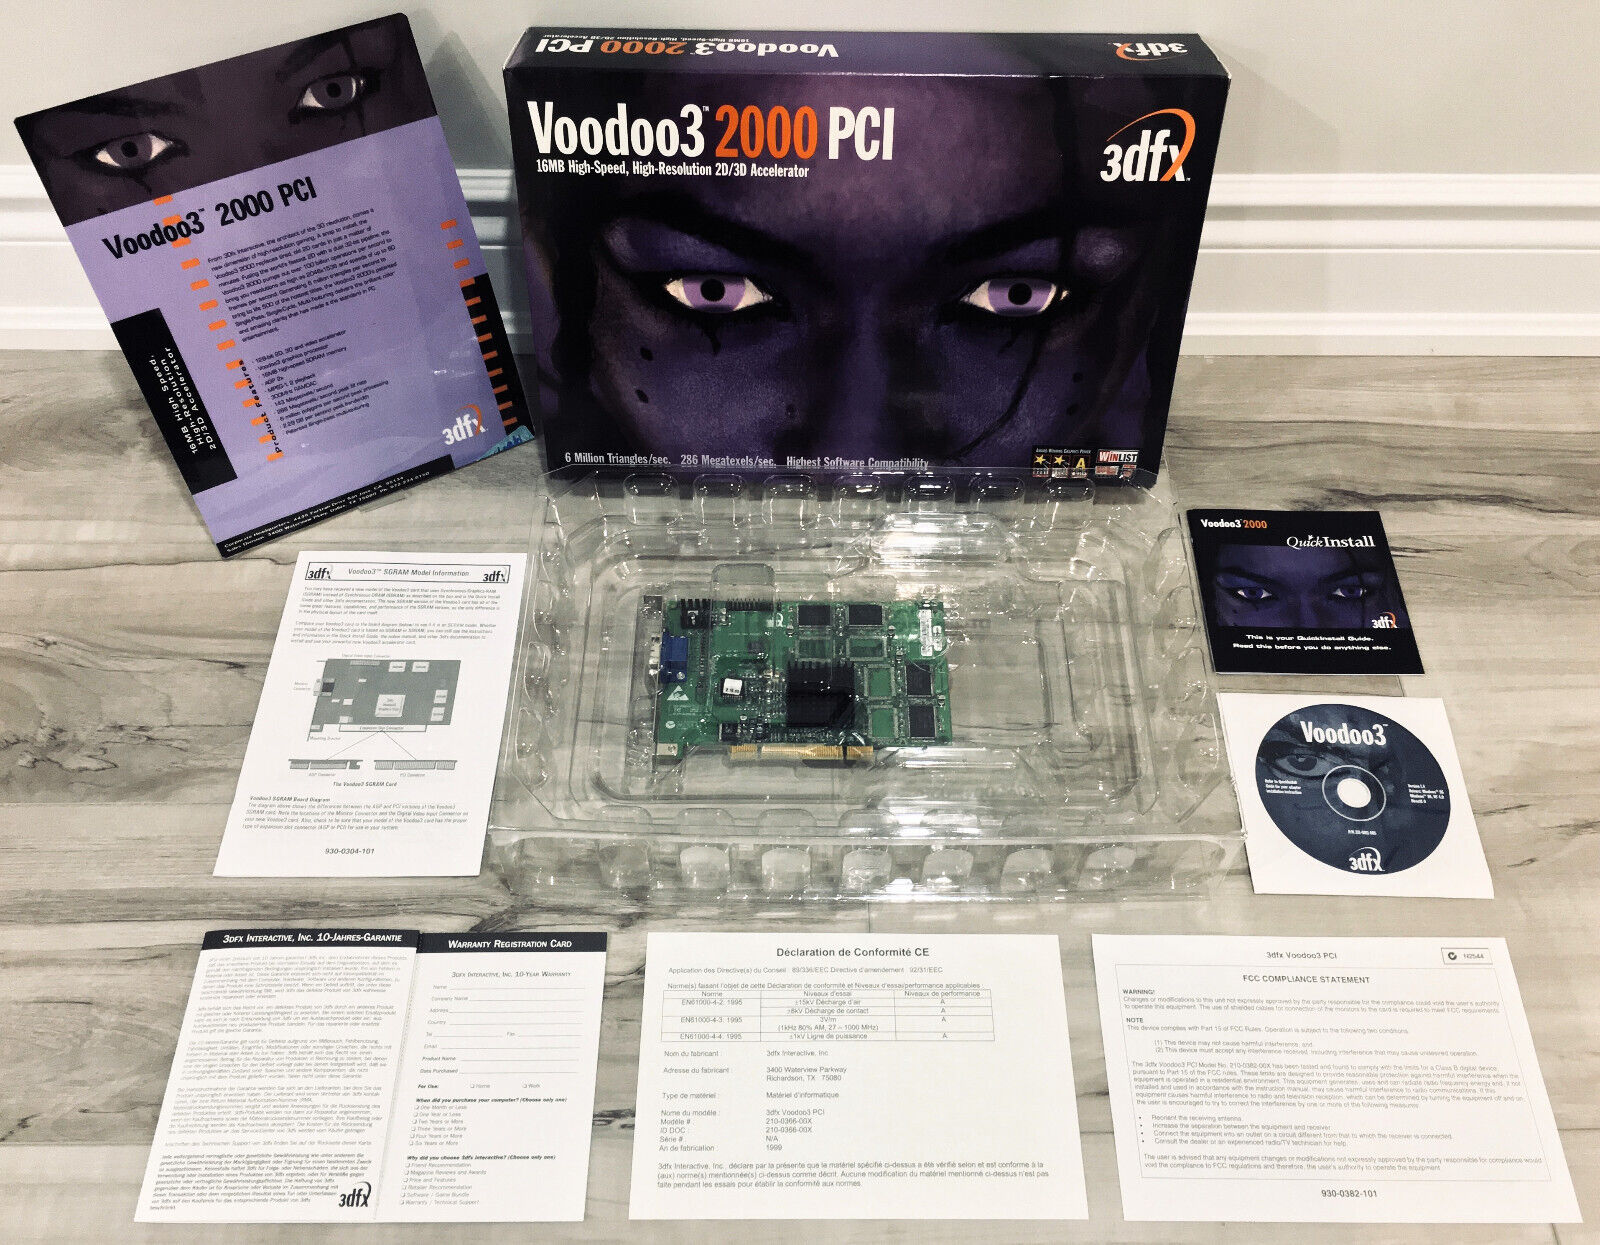 3dfx Voodoo3 2000 PCI 16MB Graphics Card, Upgradeable MEM, SGRAM Version, Poster